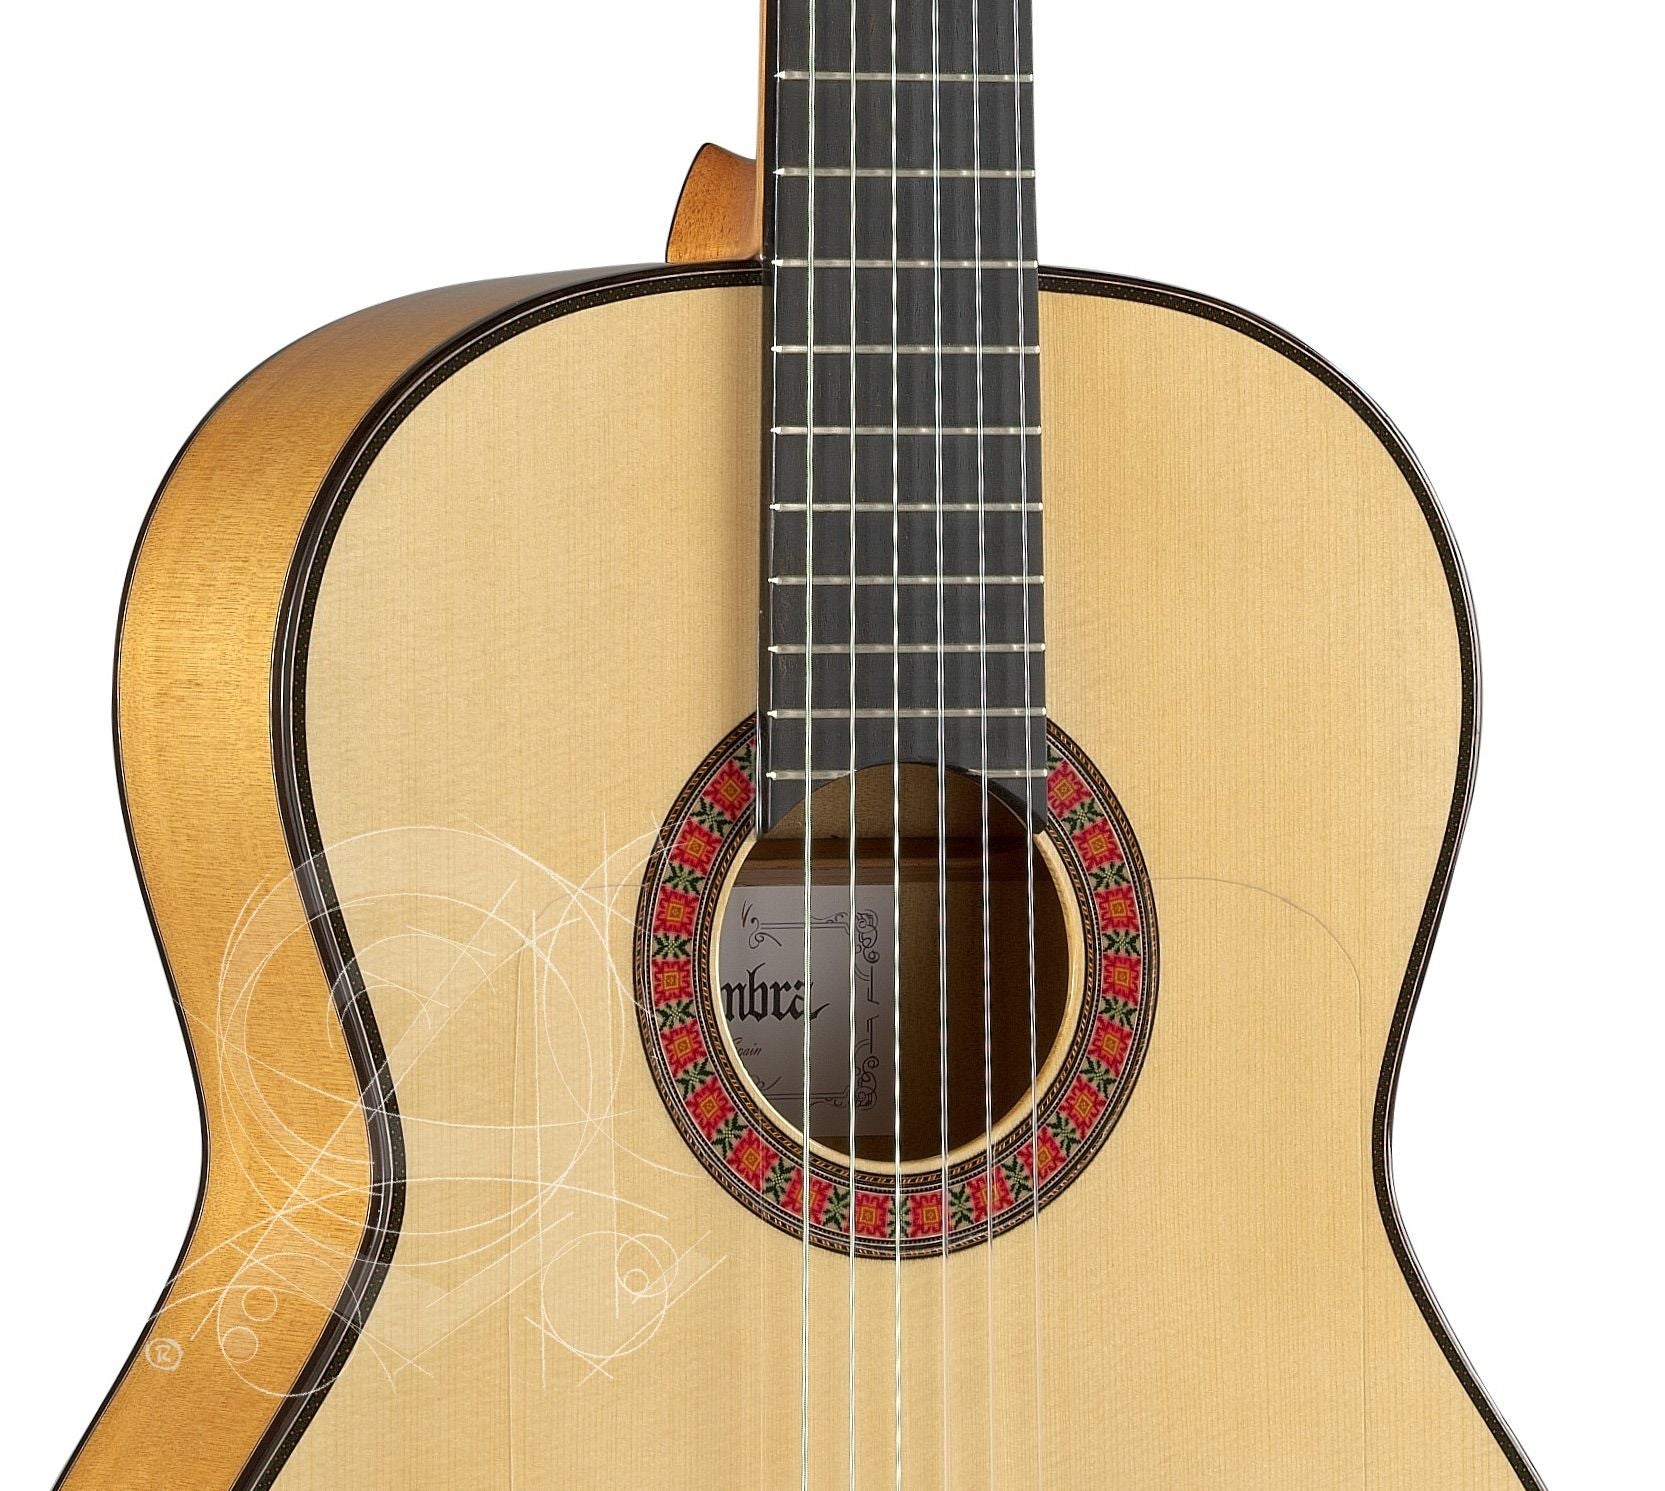 Alhambra 10FC Flamenco Guitar (with original hardcase)